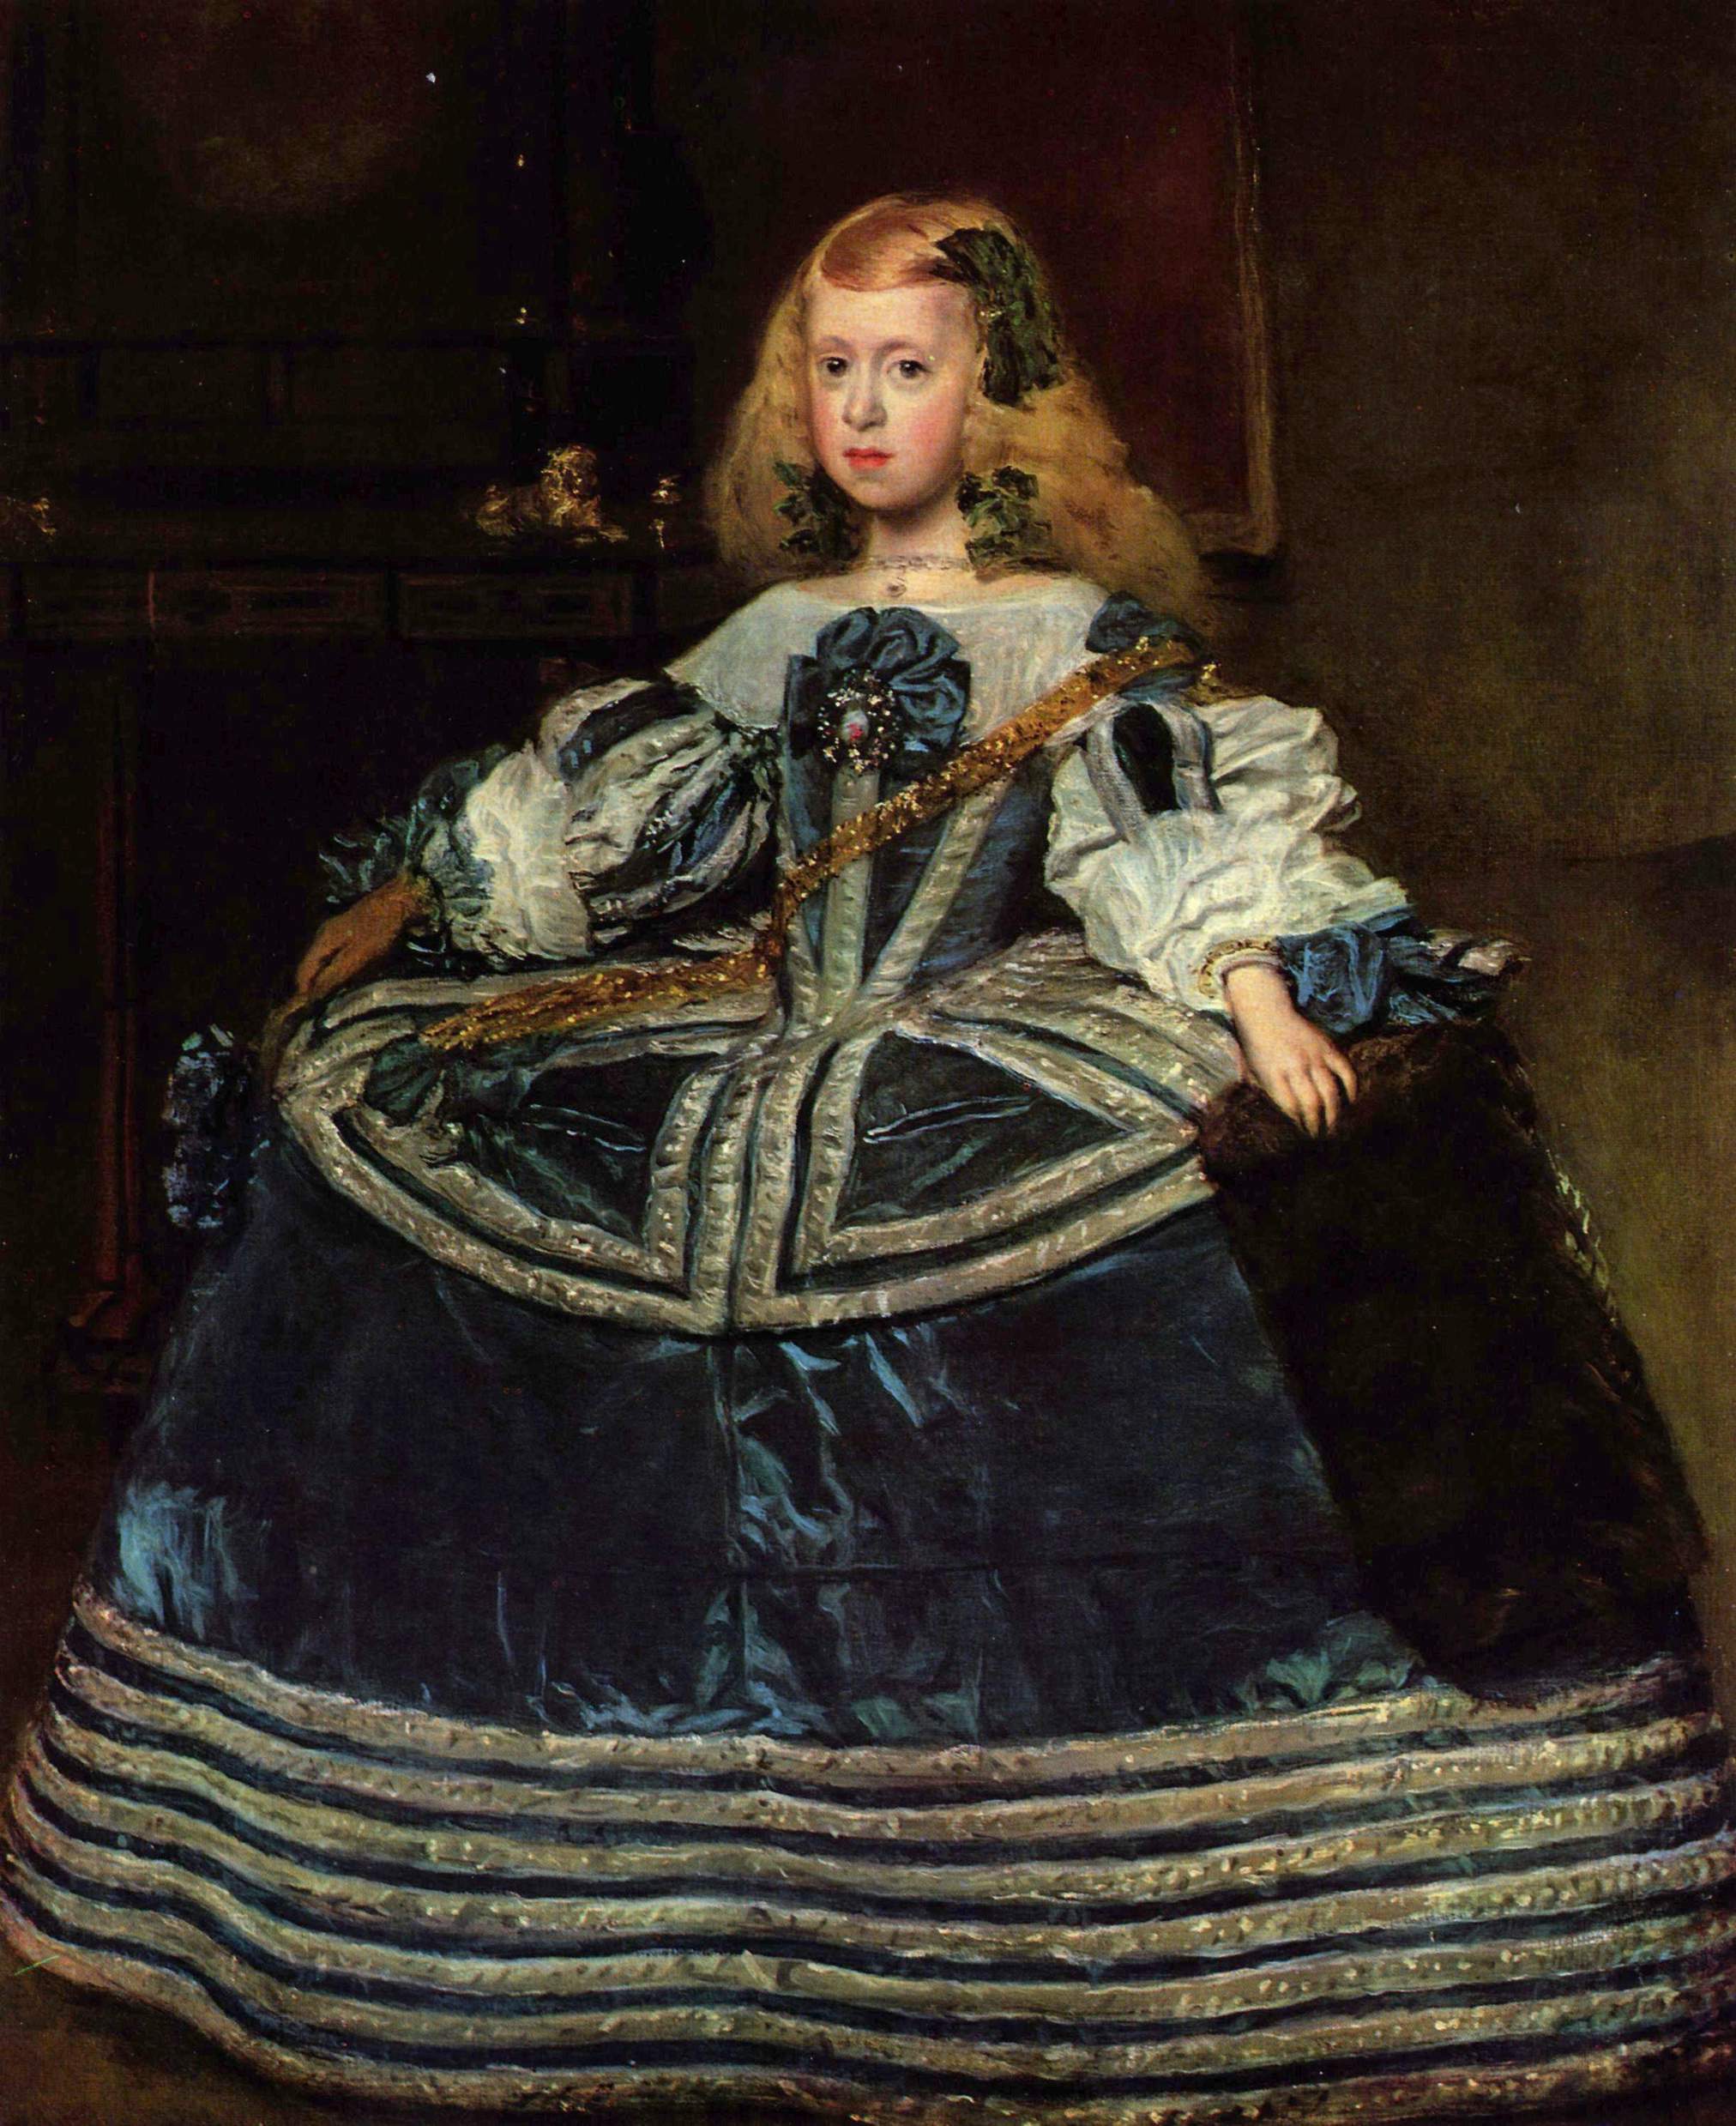 İspanyol Prensesi Margarita Theresa by Diego Velázquez - 1659 - 127 cm × 107 cm Kunsthistorisches Museum